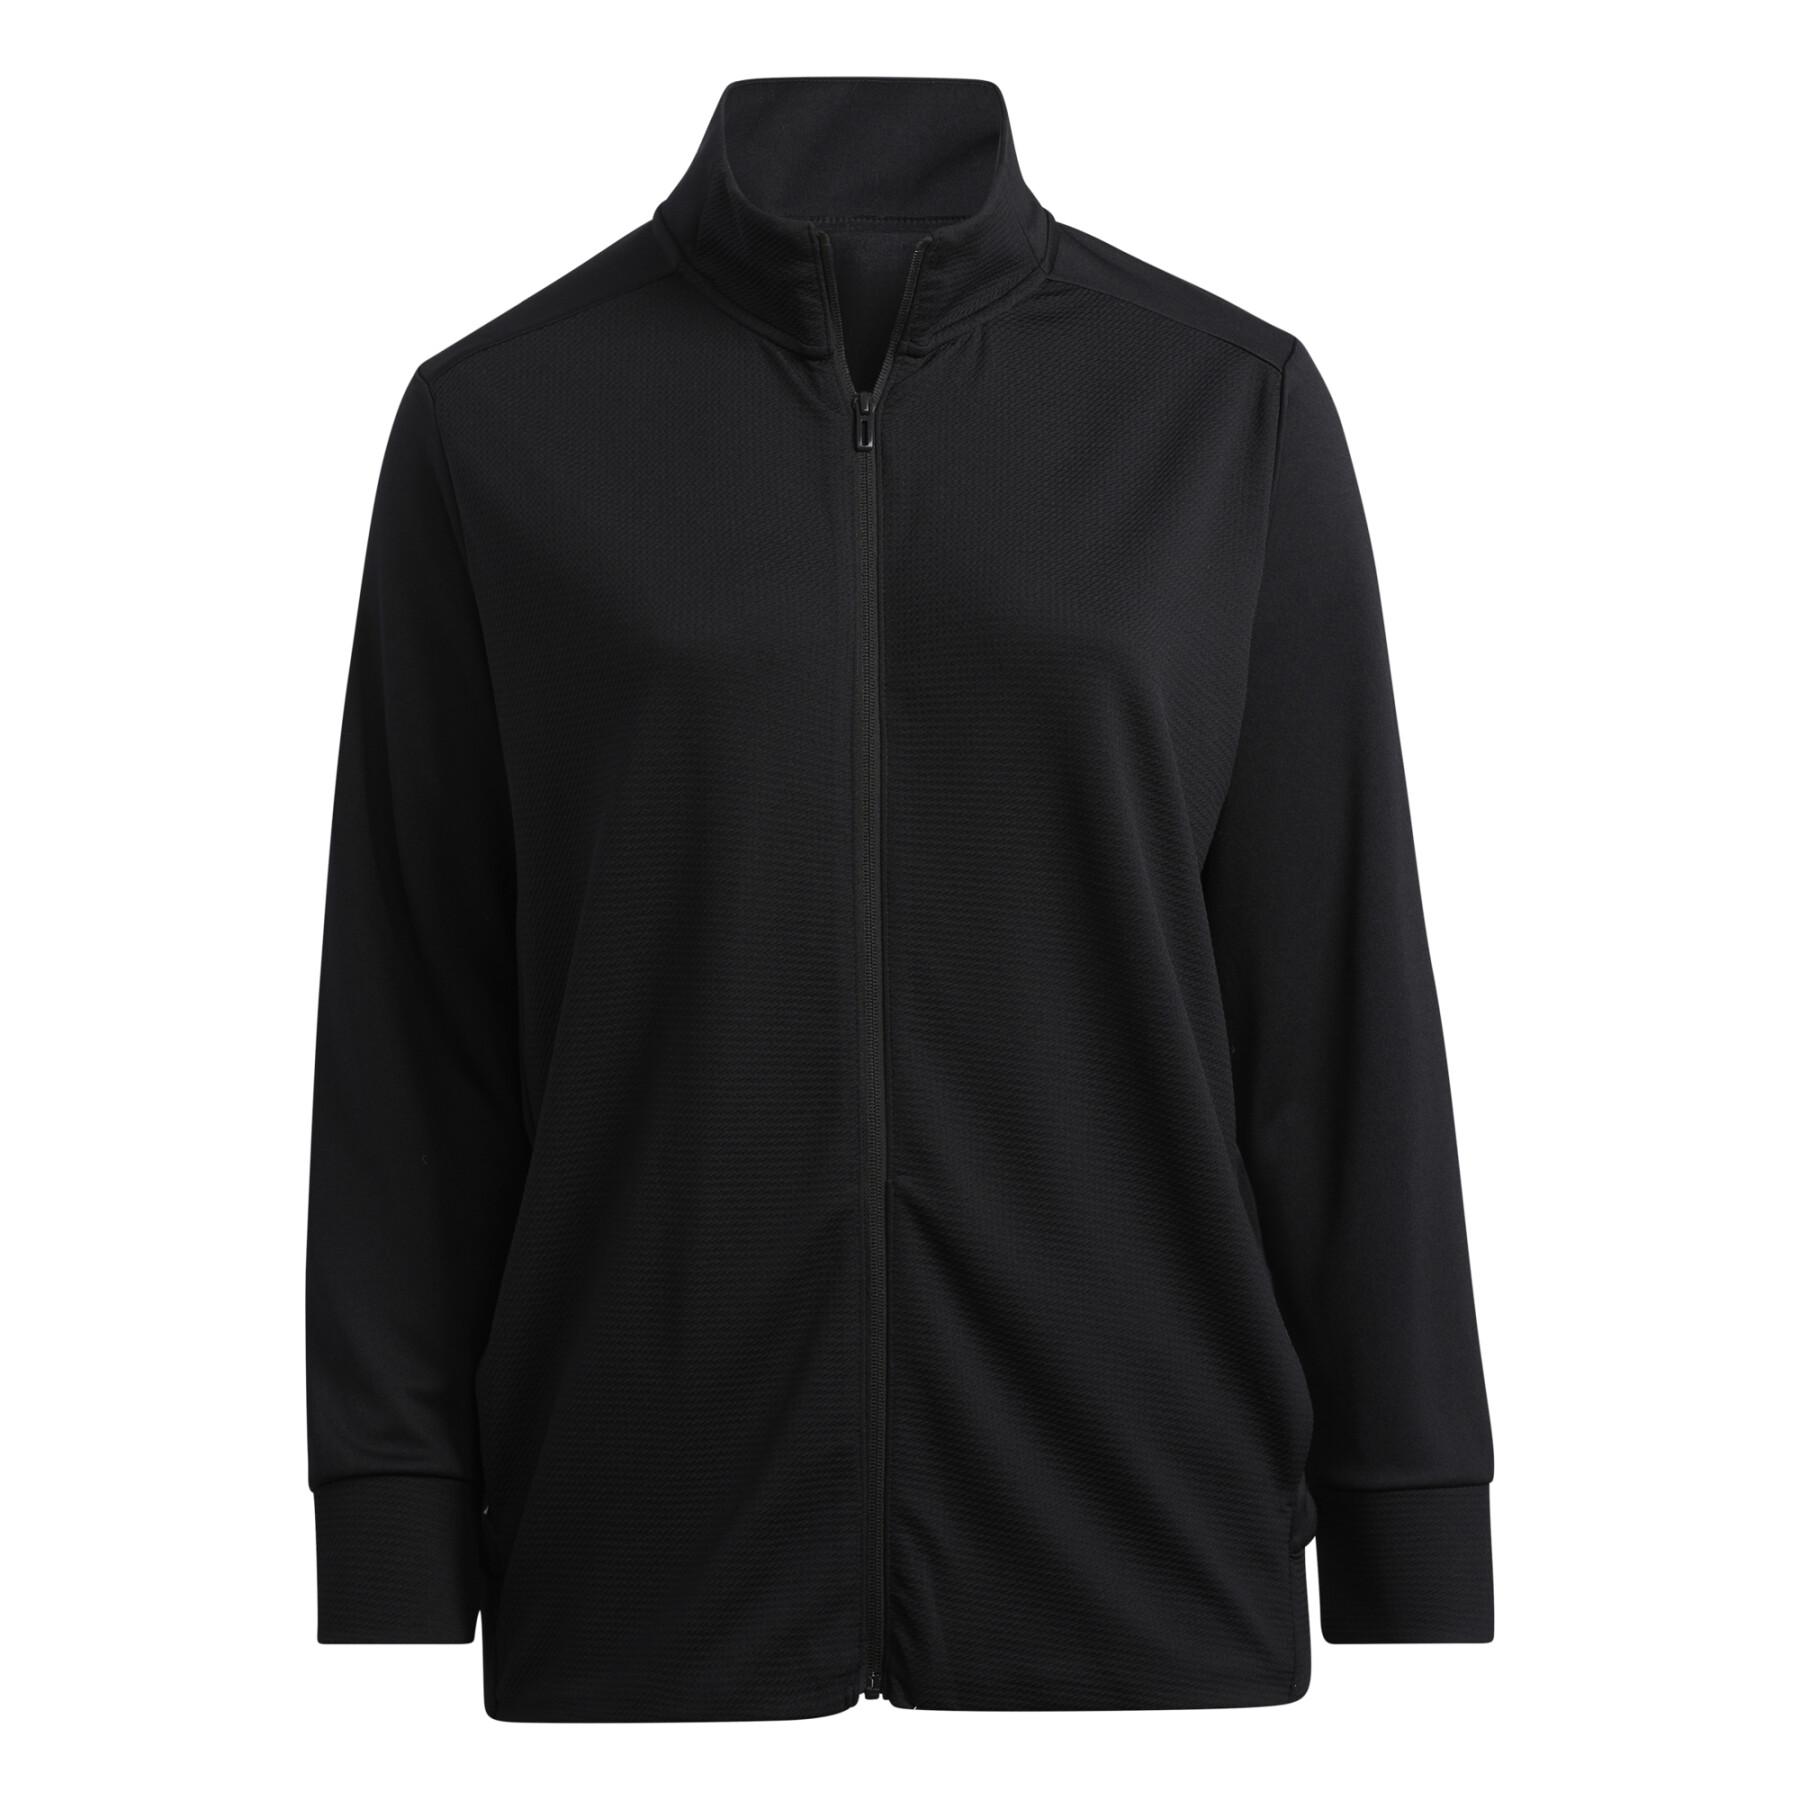 Women's jacket adidas Golf Veste Textured Full-Zip (Large sizes)